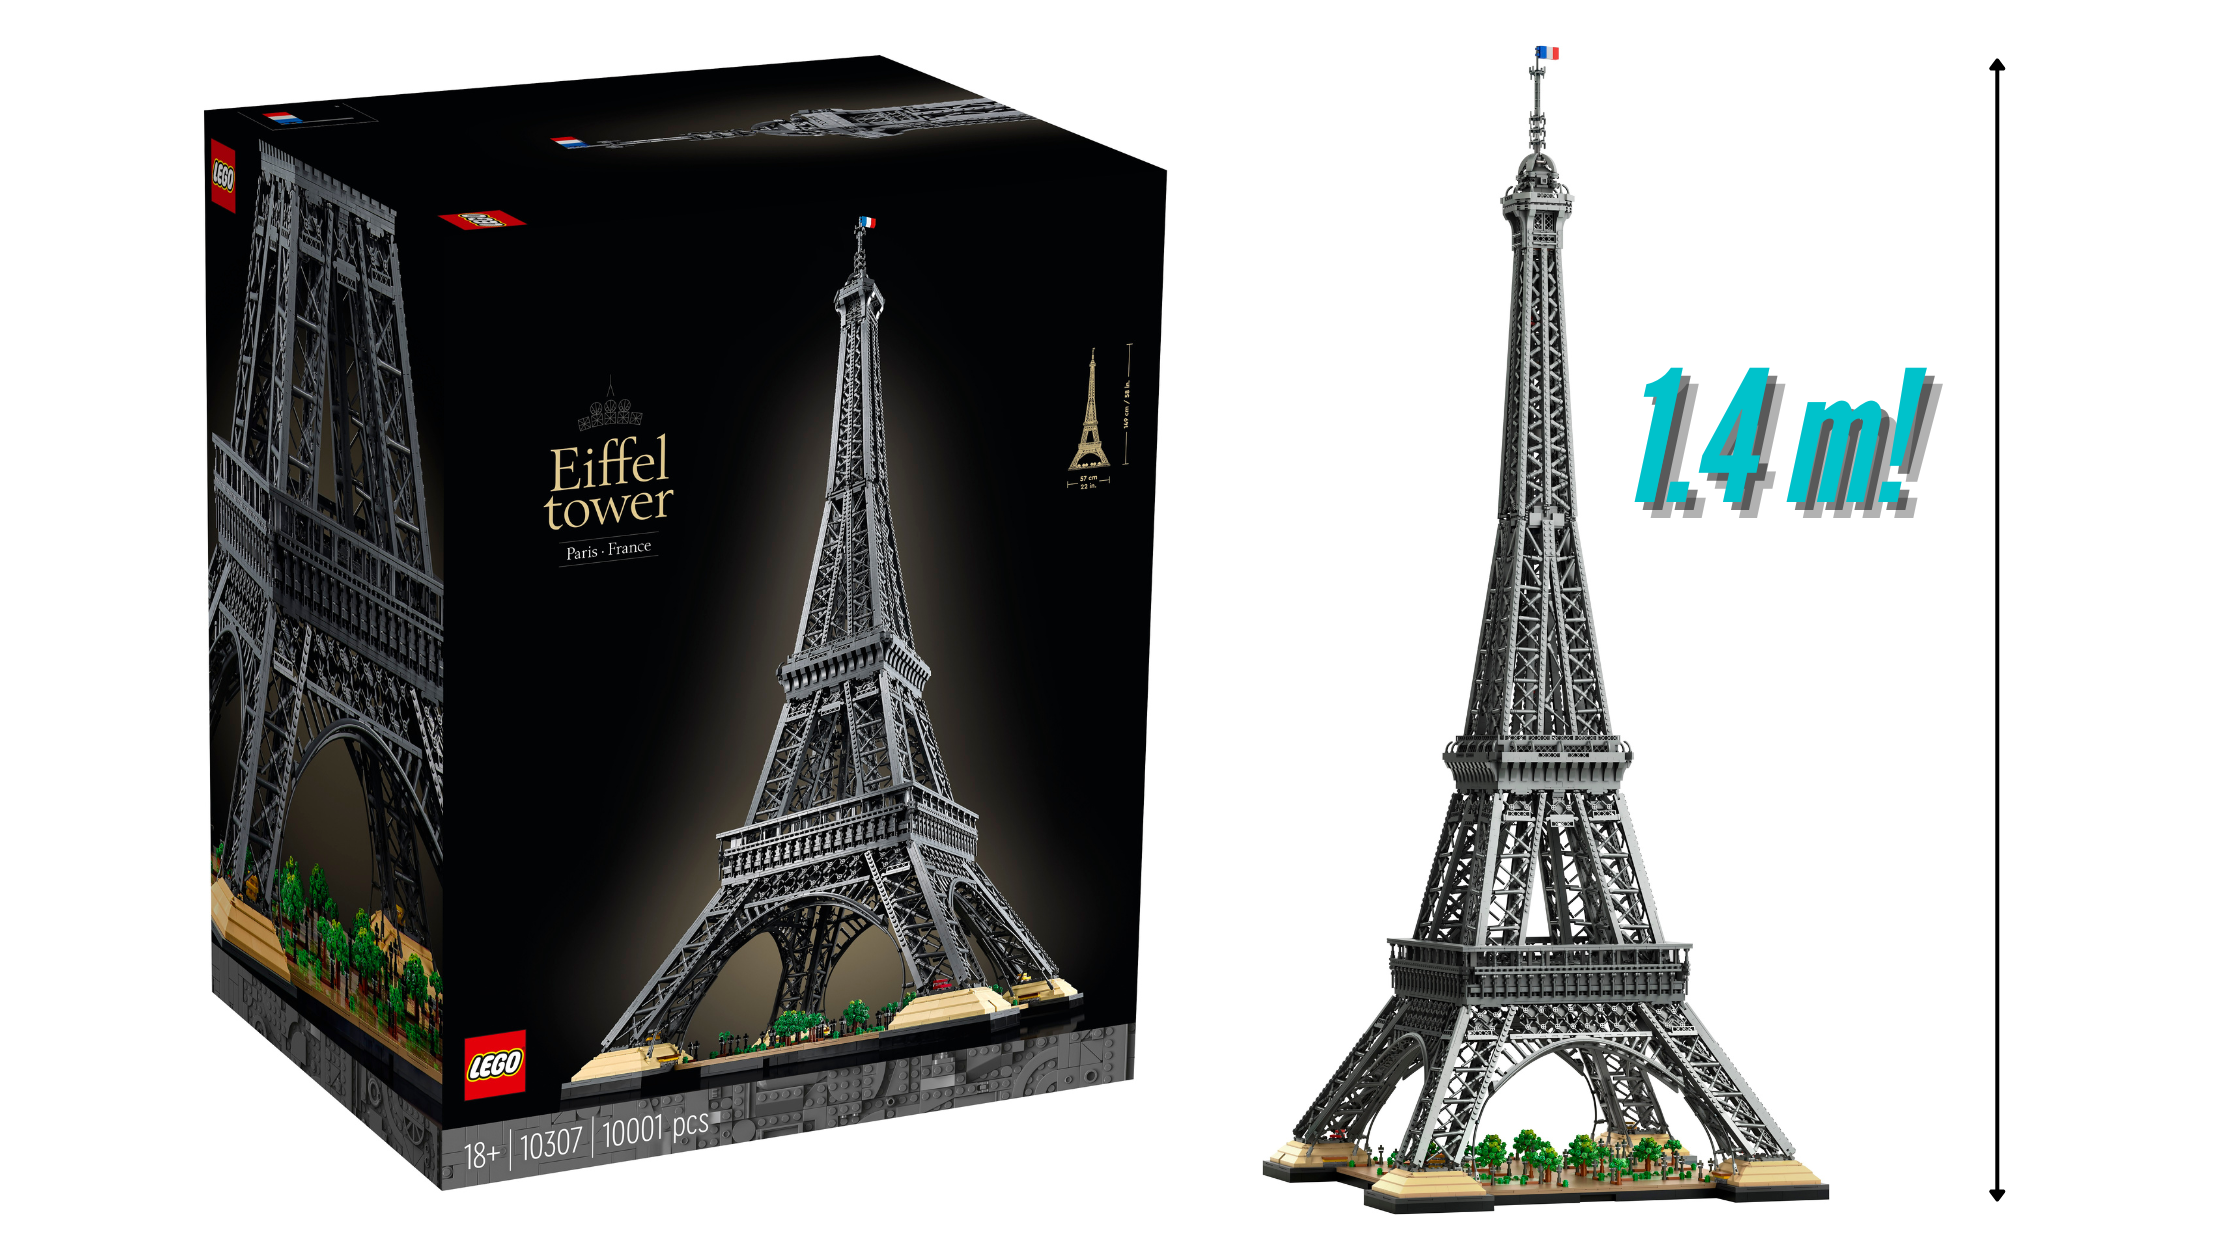 Brickfinder - LEGO Eiffel Tower 10307 Is The Tallest Set Ever Made!